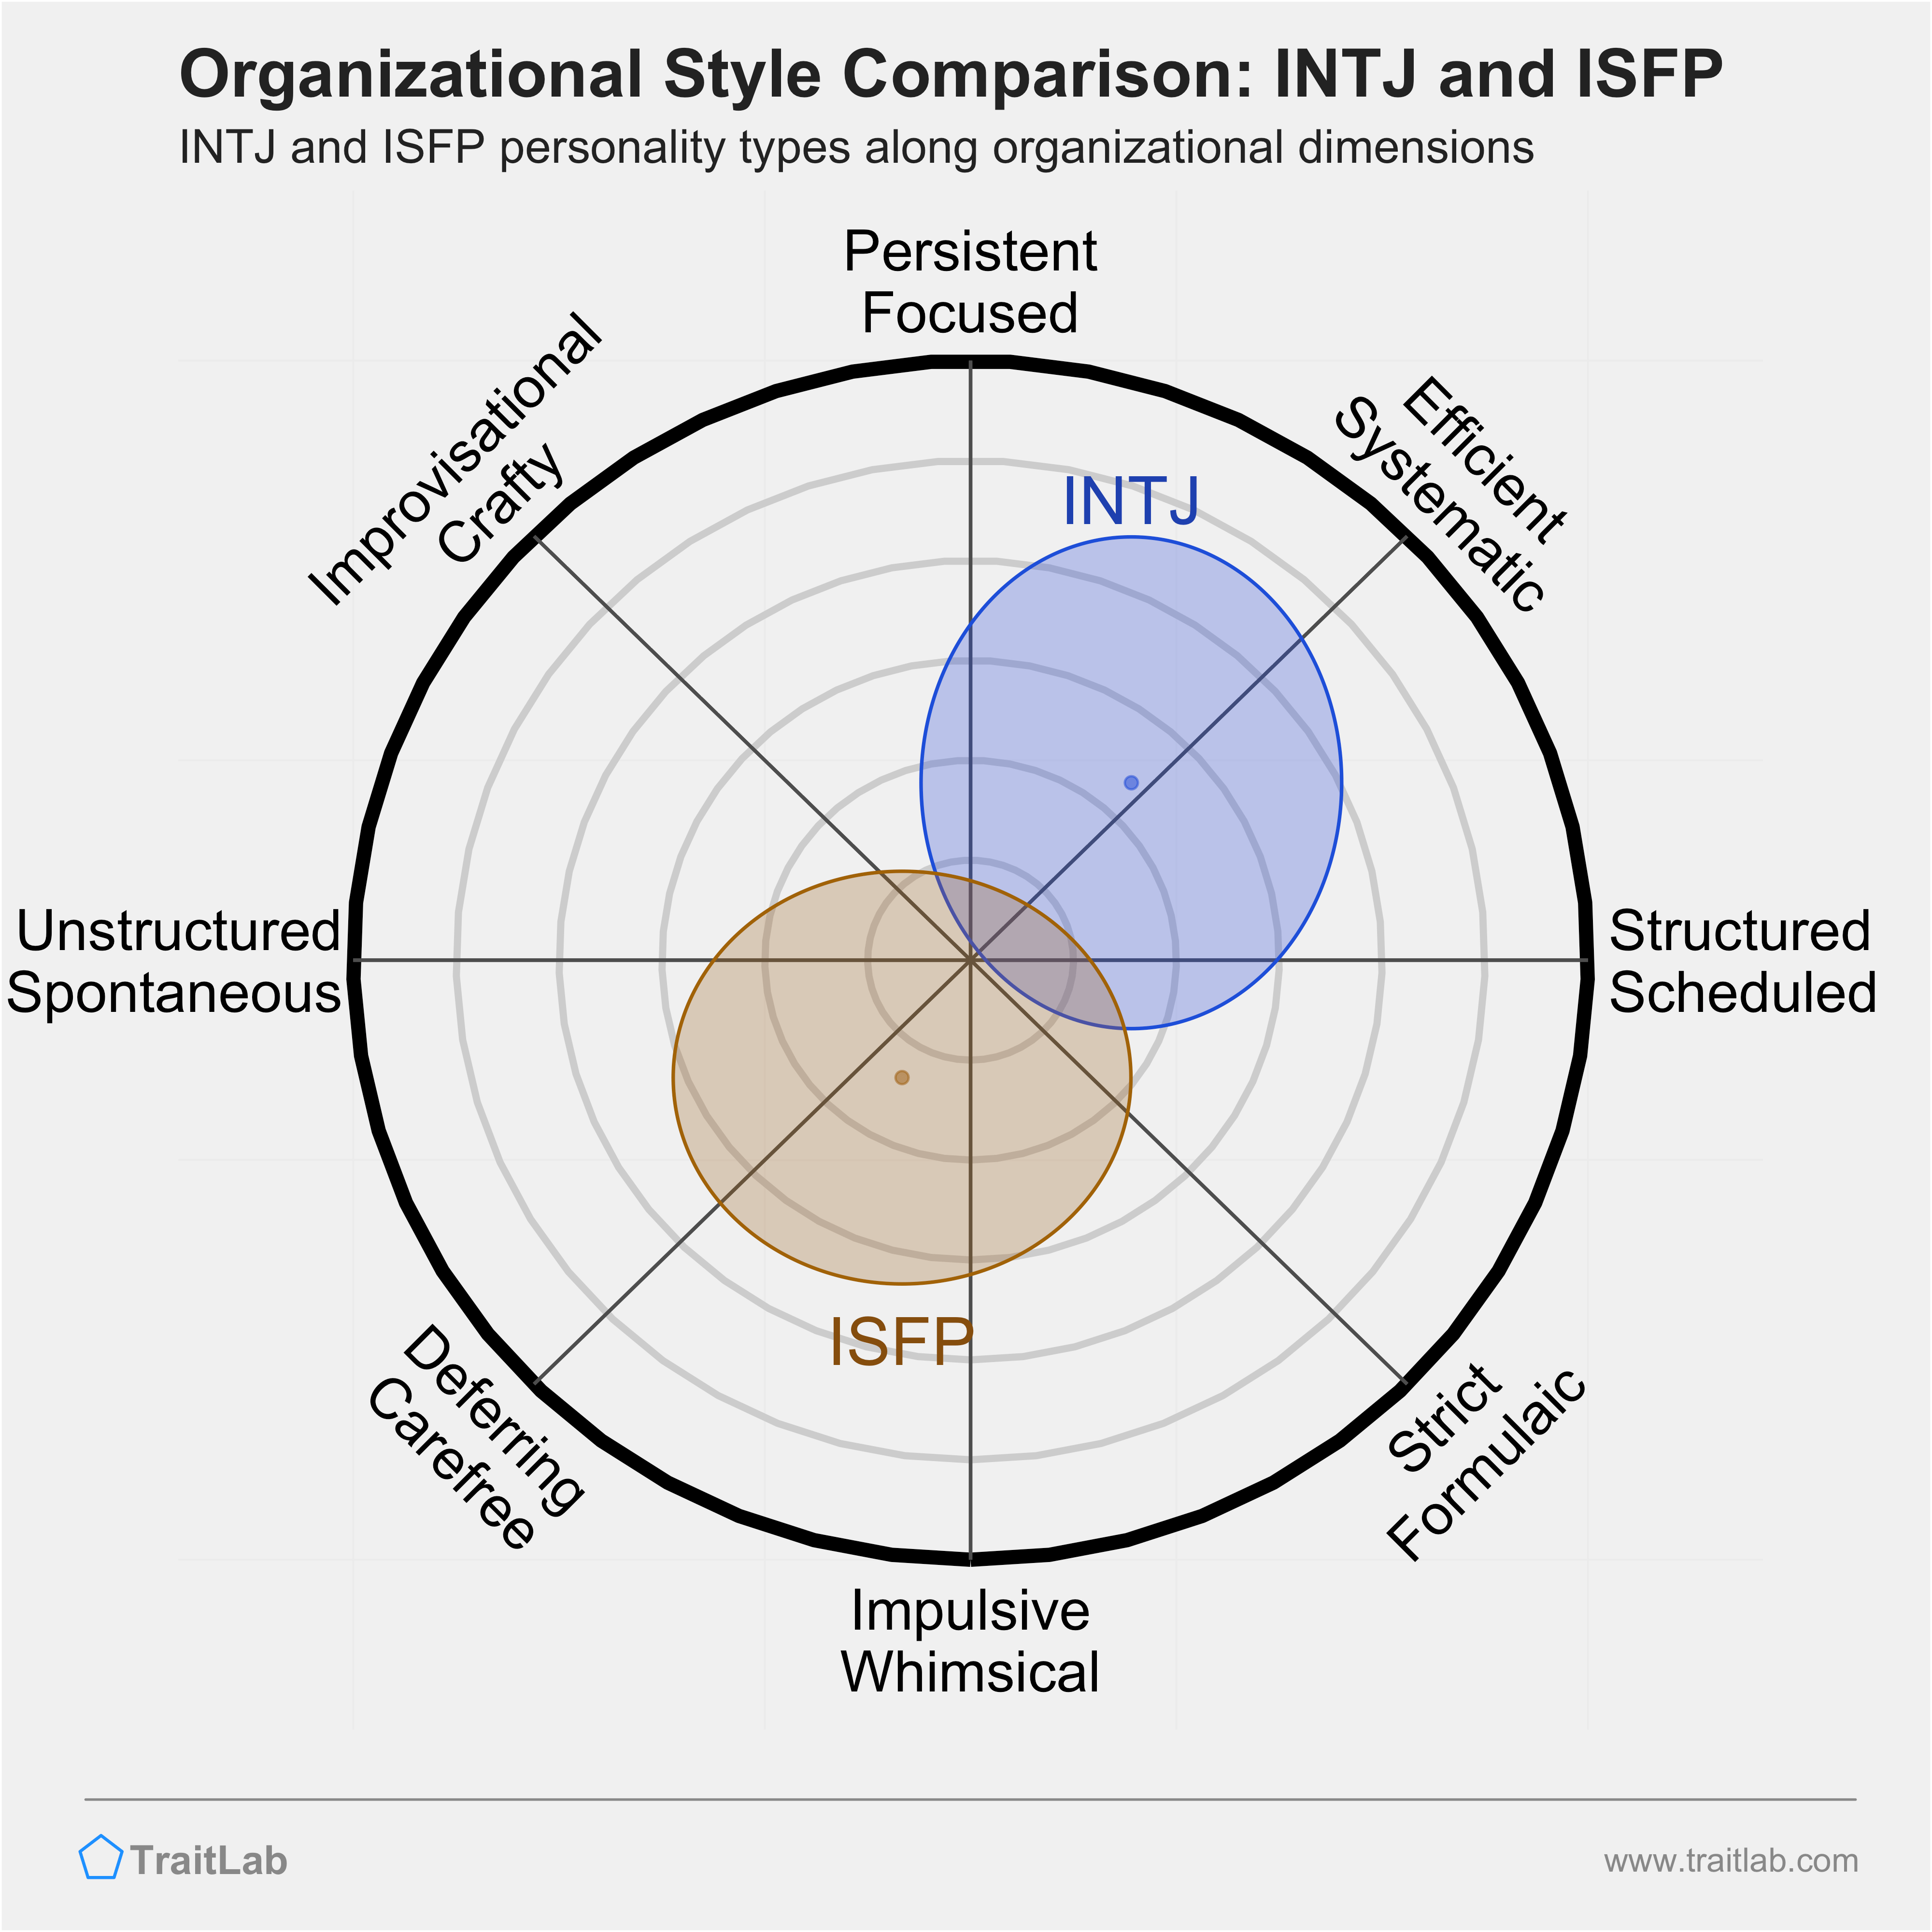 INTJ and ISFP comparison across organizational dimensions